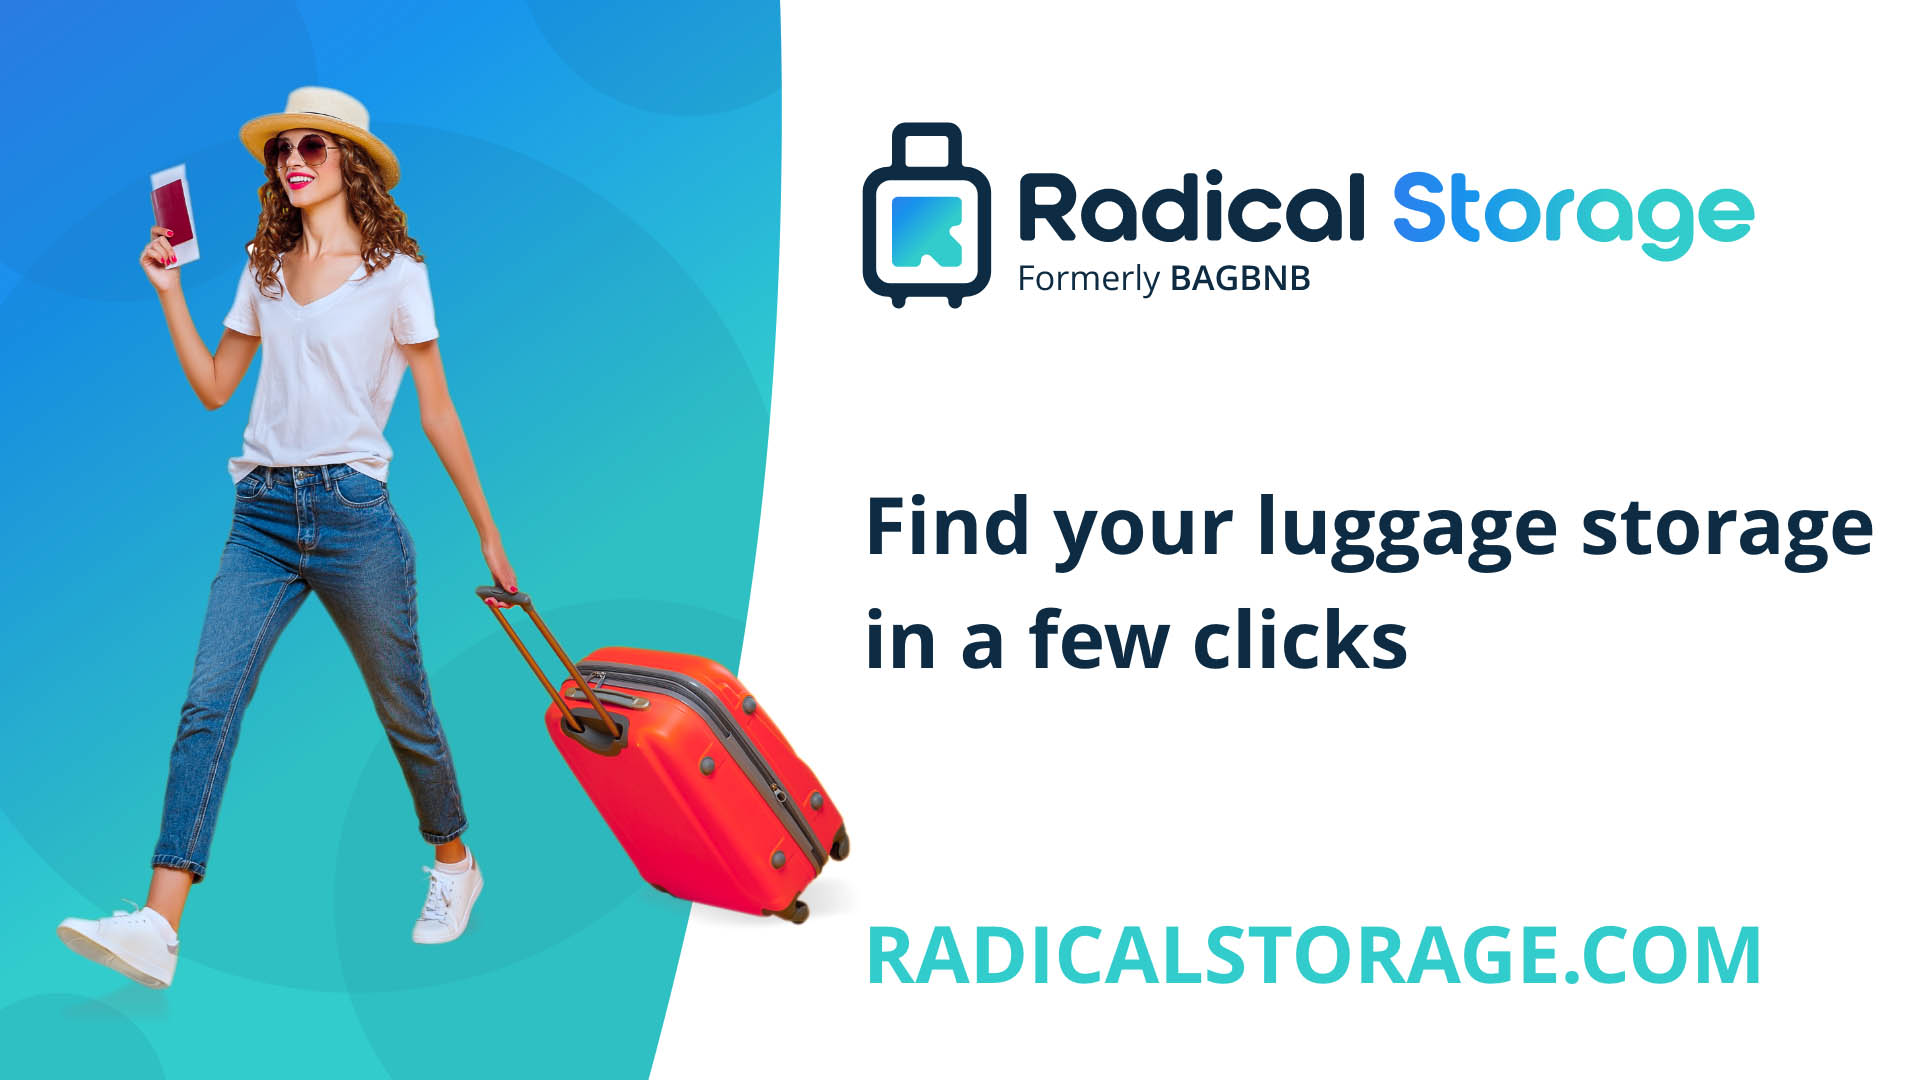 Luggage storage Verona â¬5 / day | Bag Storage & Lockers